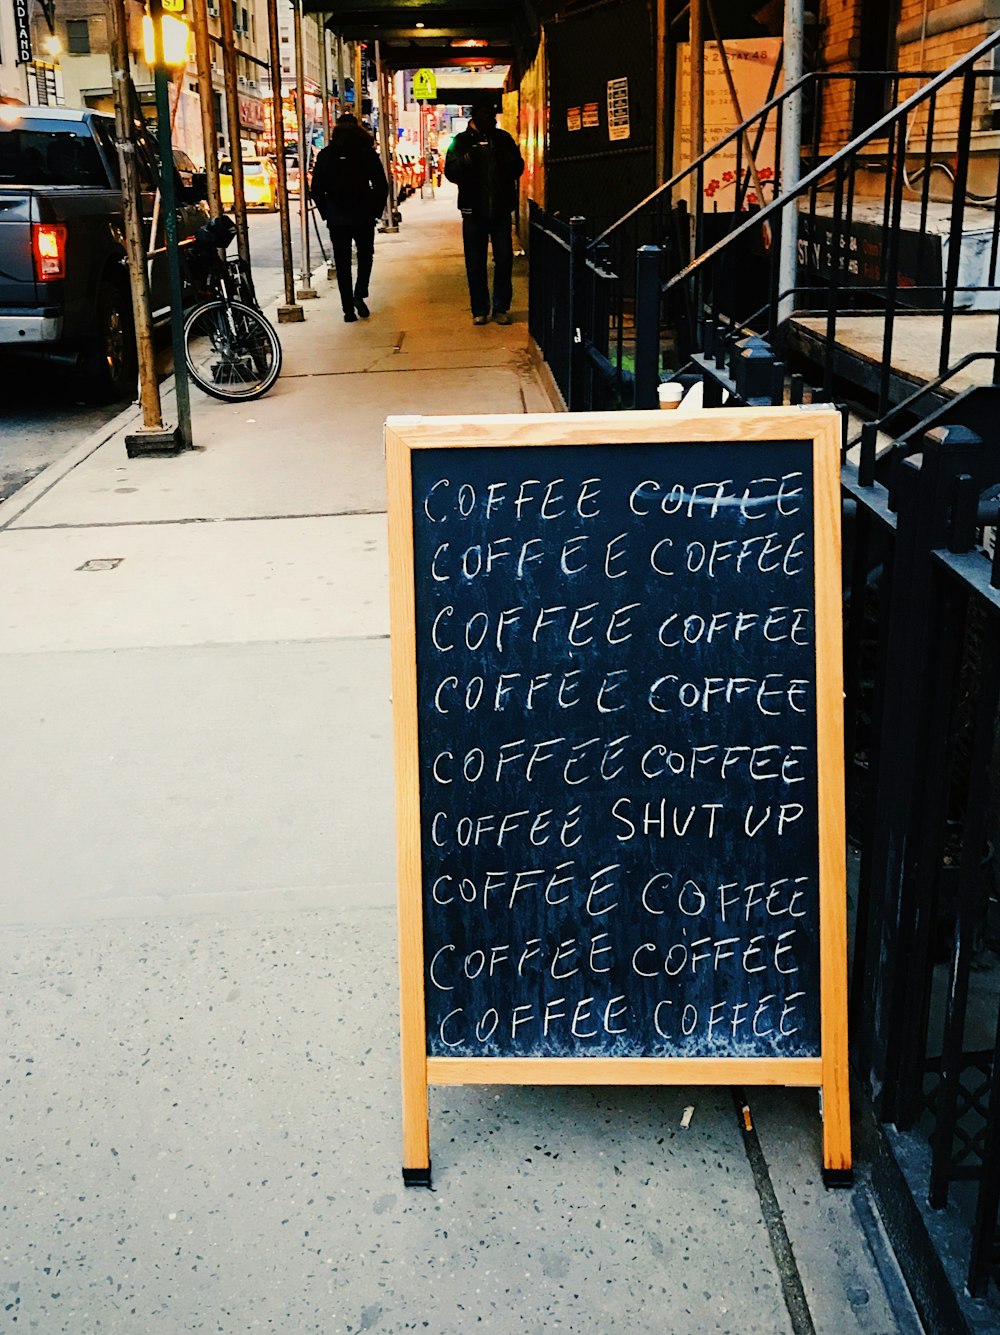 coffee signs near buildings